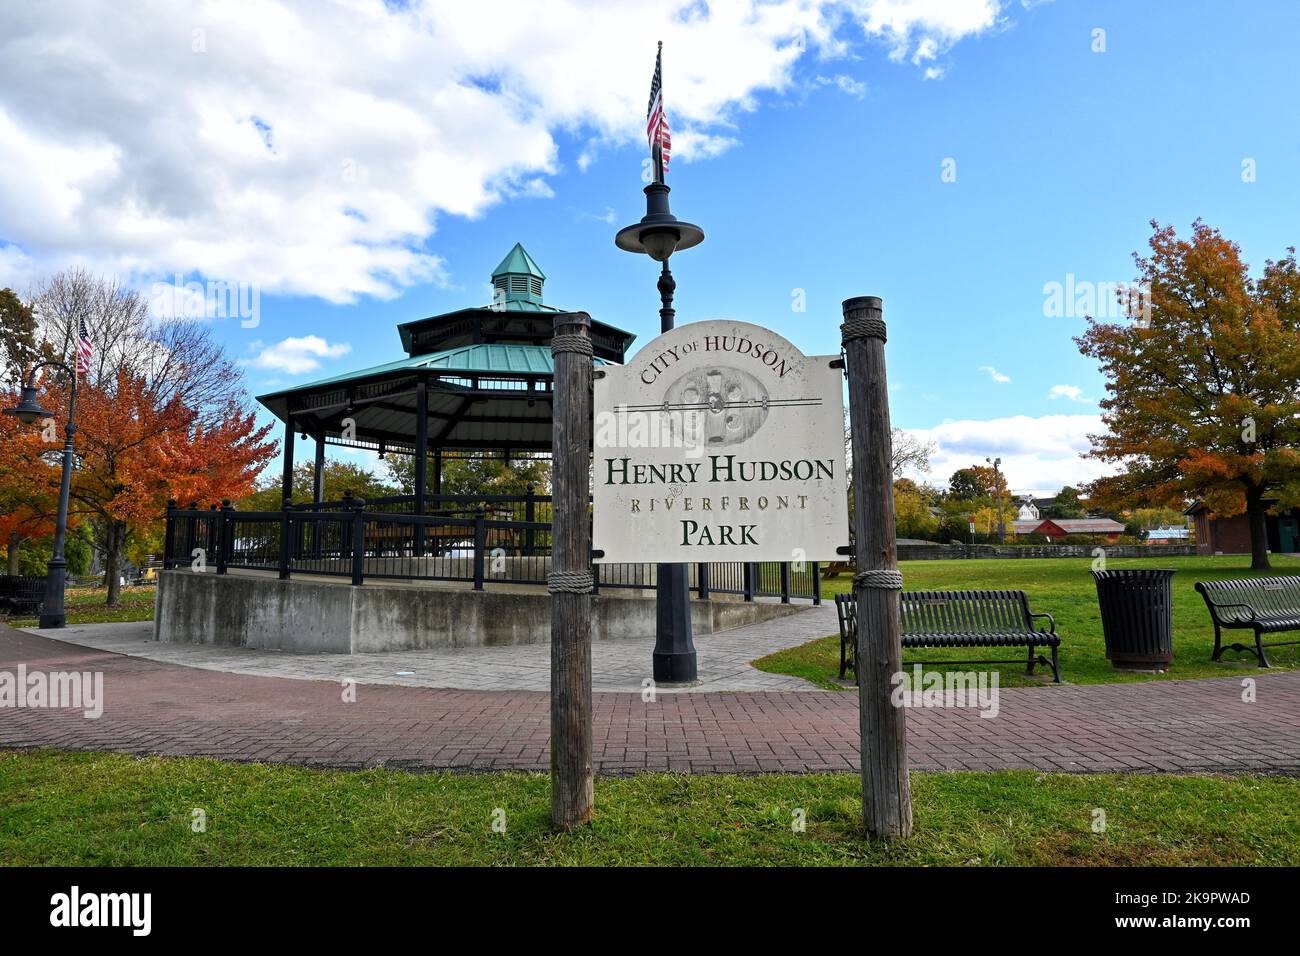 Schild und Pavillon am Henry Hudson Riverfront Park in Hudson, New York. Stockfoto